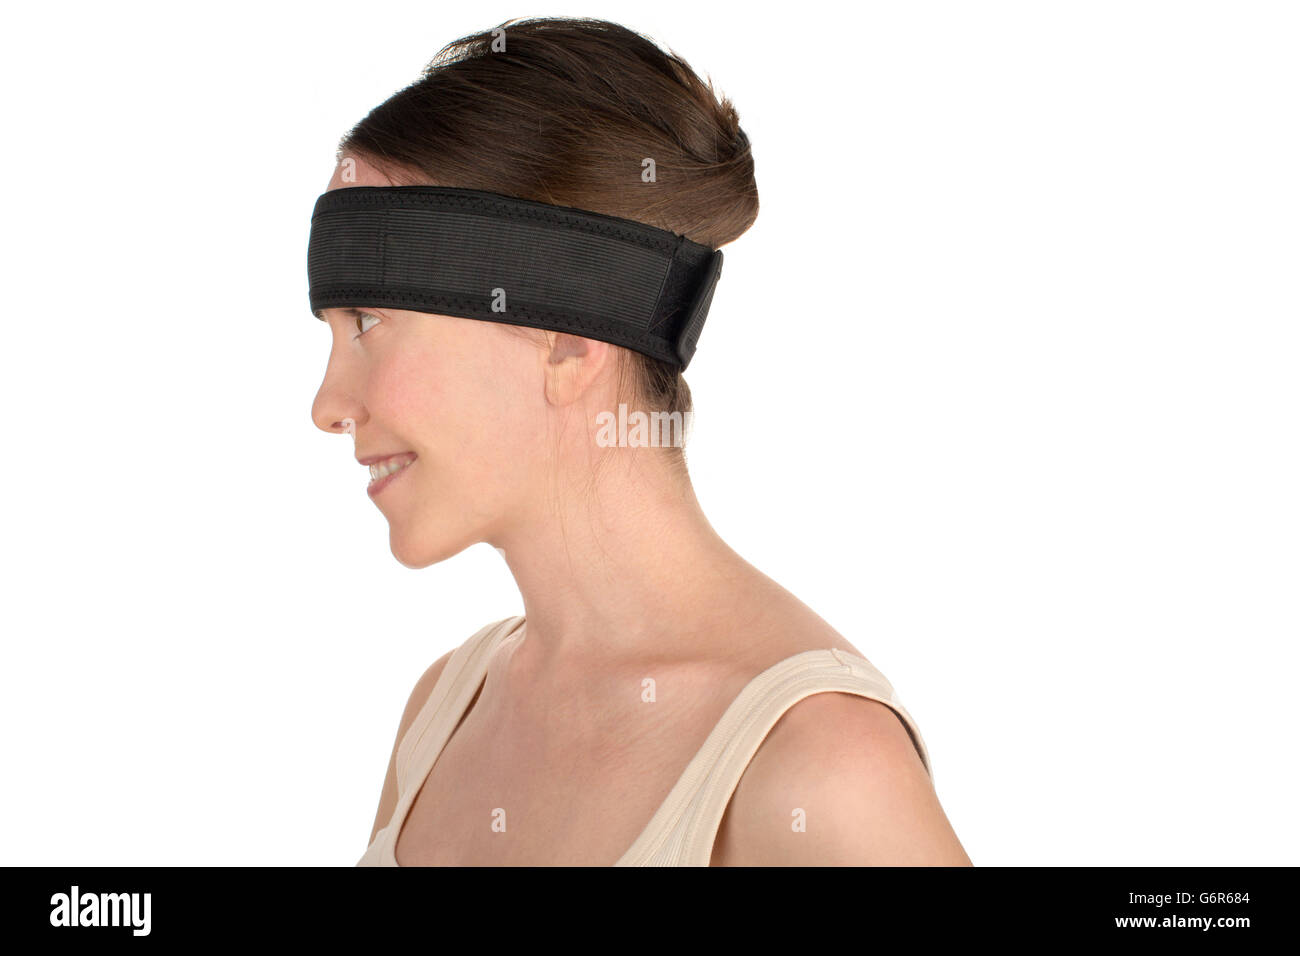 Woman in headband silhouette Stock Photo